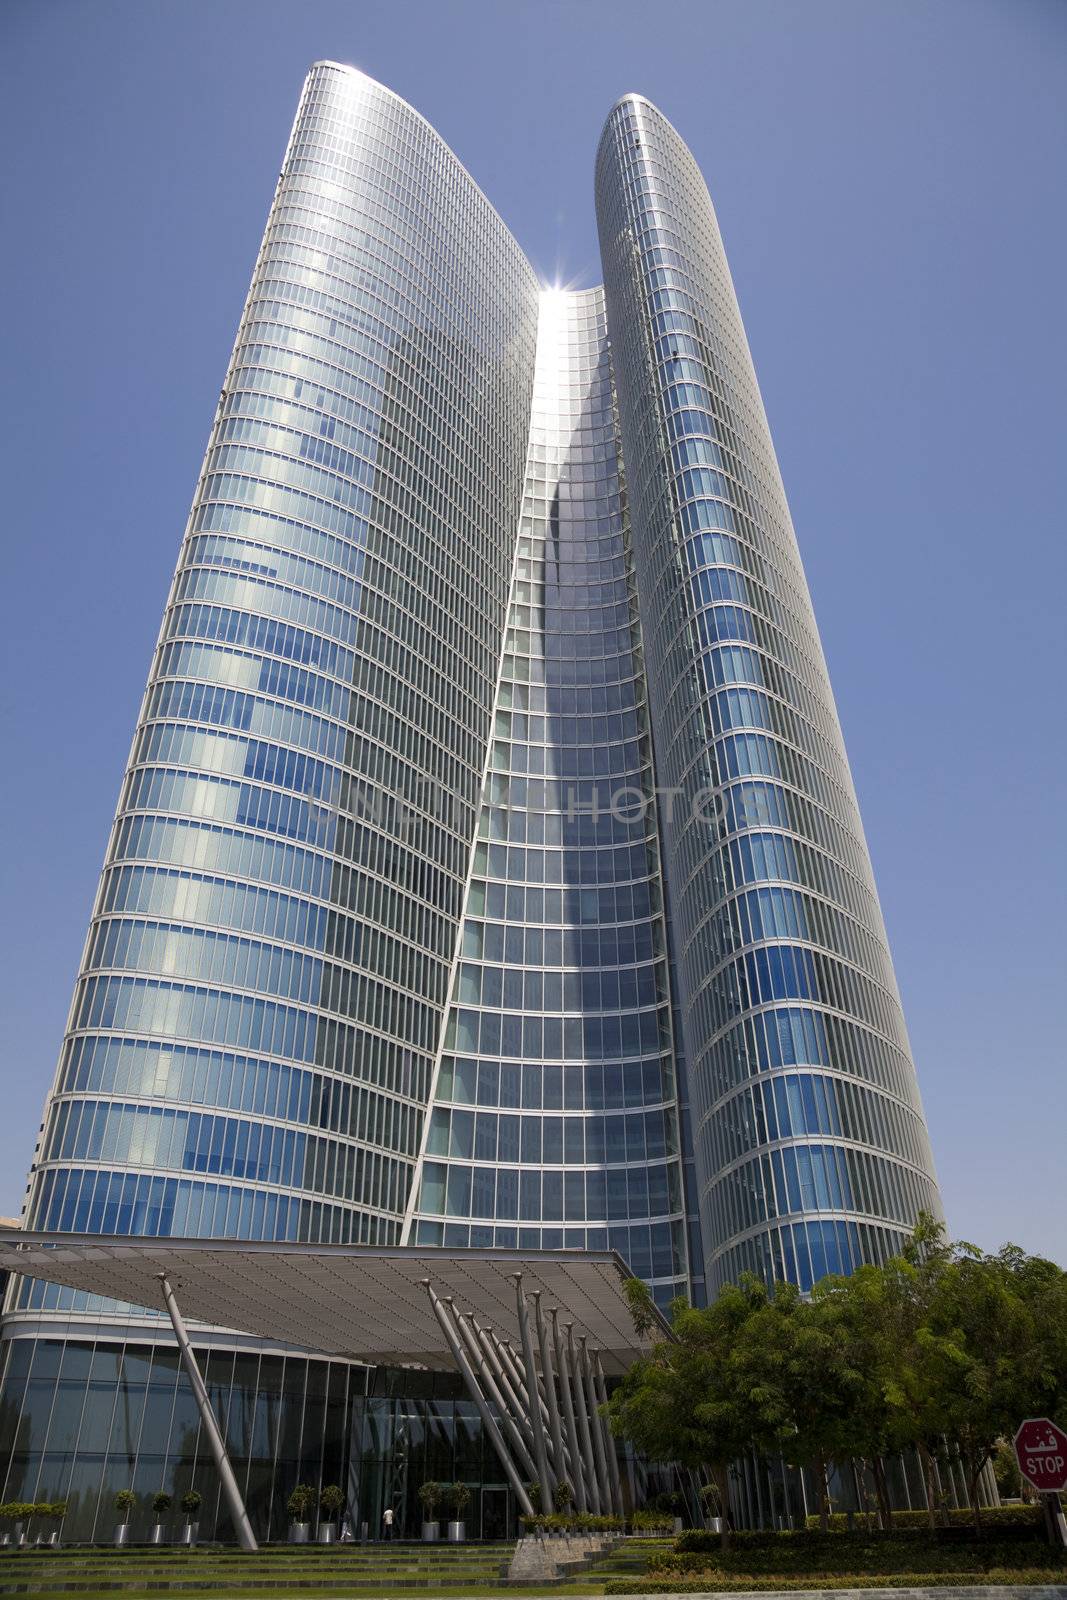 Modern Iconic Building, Abu Dhabi, UAE by shariffc